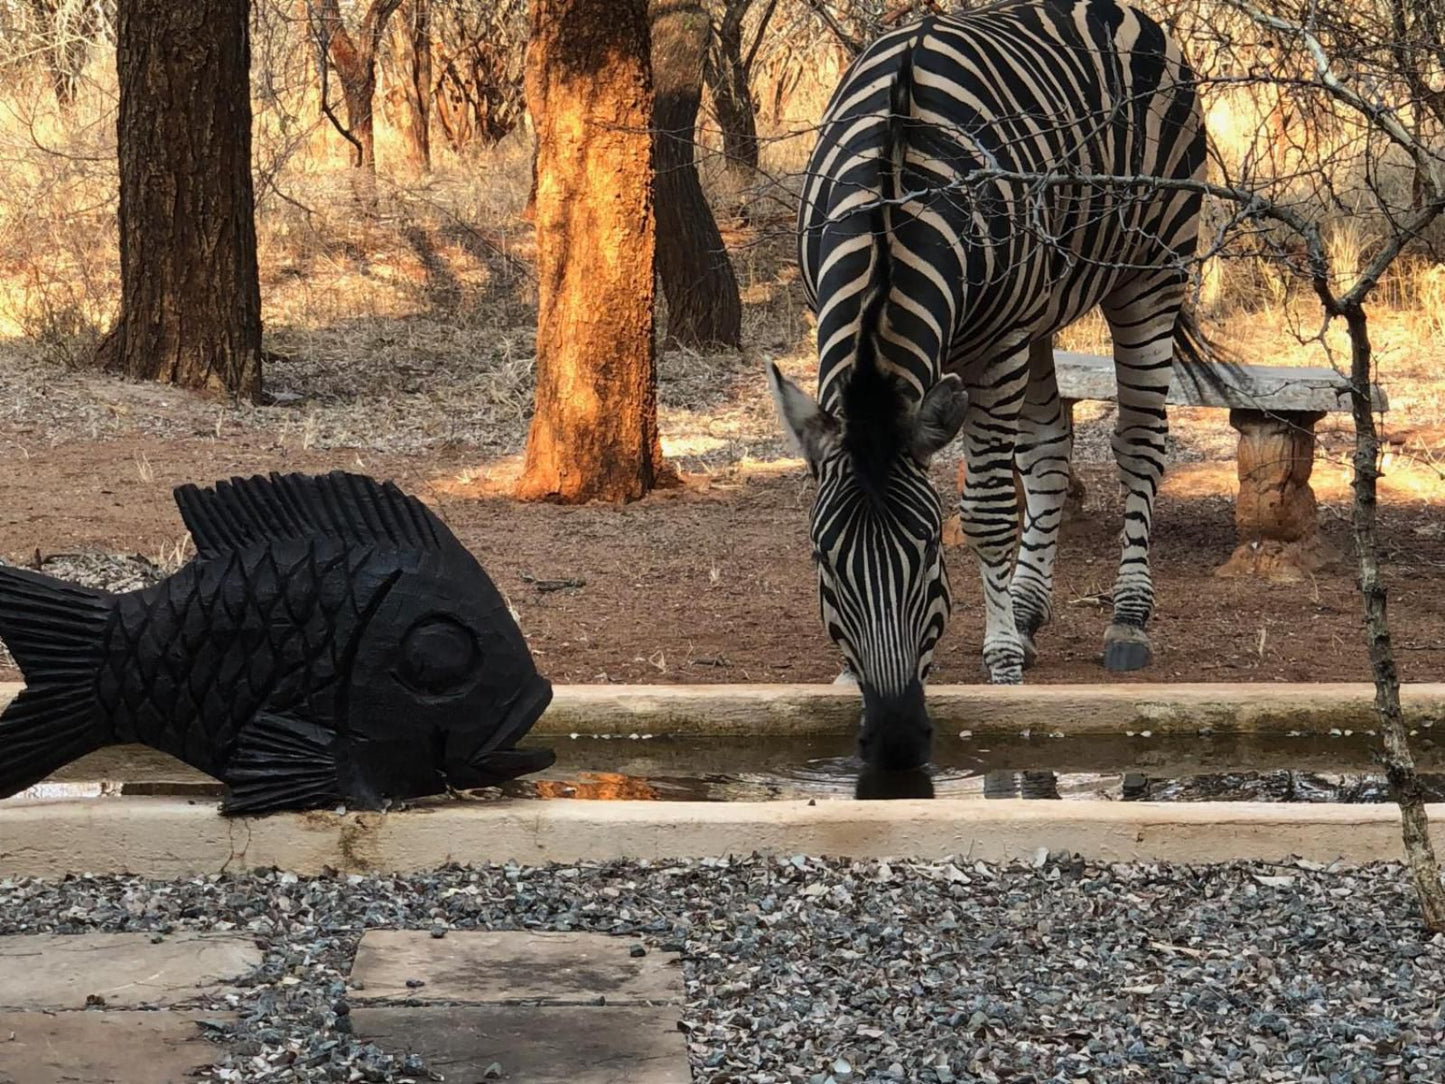 Kierieklapper River House Marloth Park Mpumalanga South Africa Zebra, Mammal, Animal, Herbivore